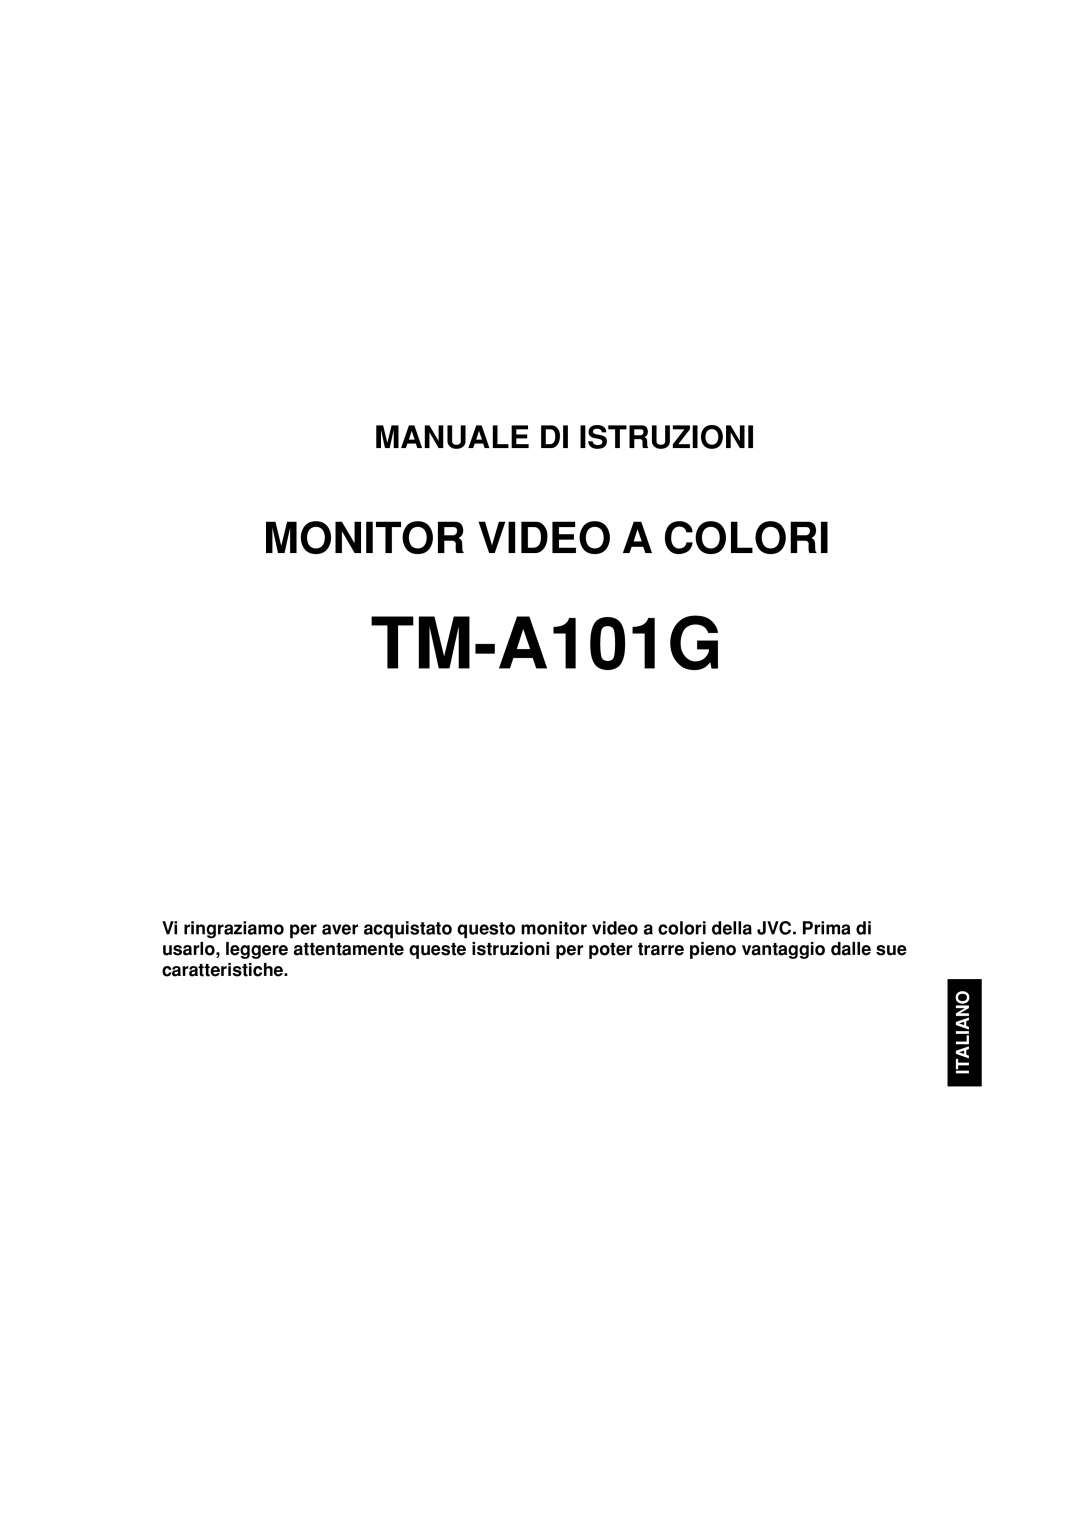 JVC TM-A101G manual Monitor Video A Colori, Manuale Di Istruzioni, Italiano 